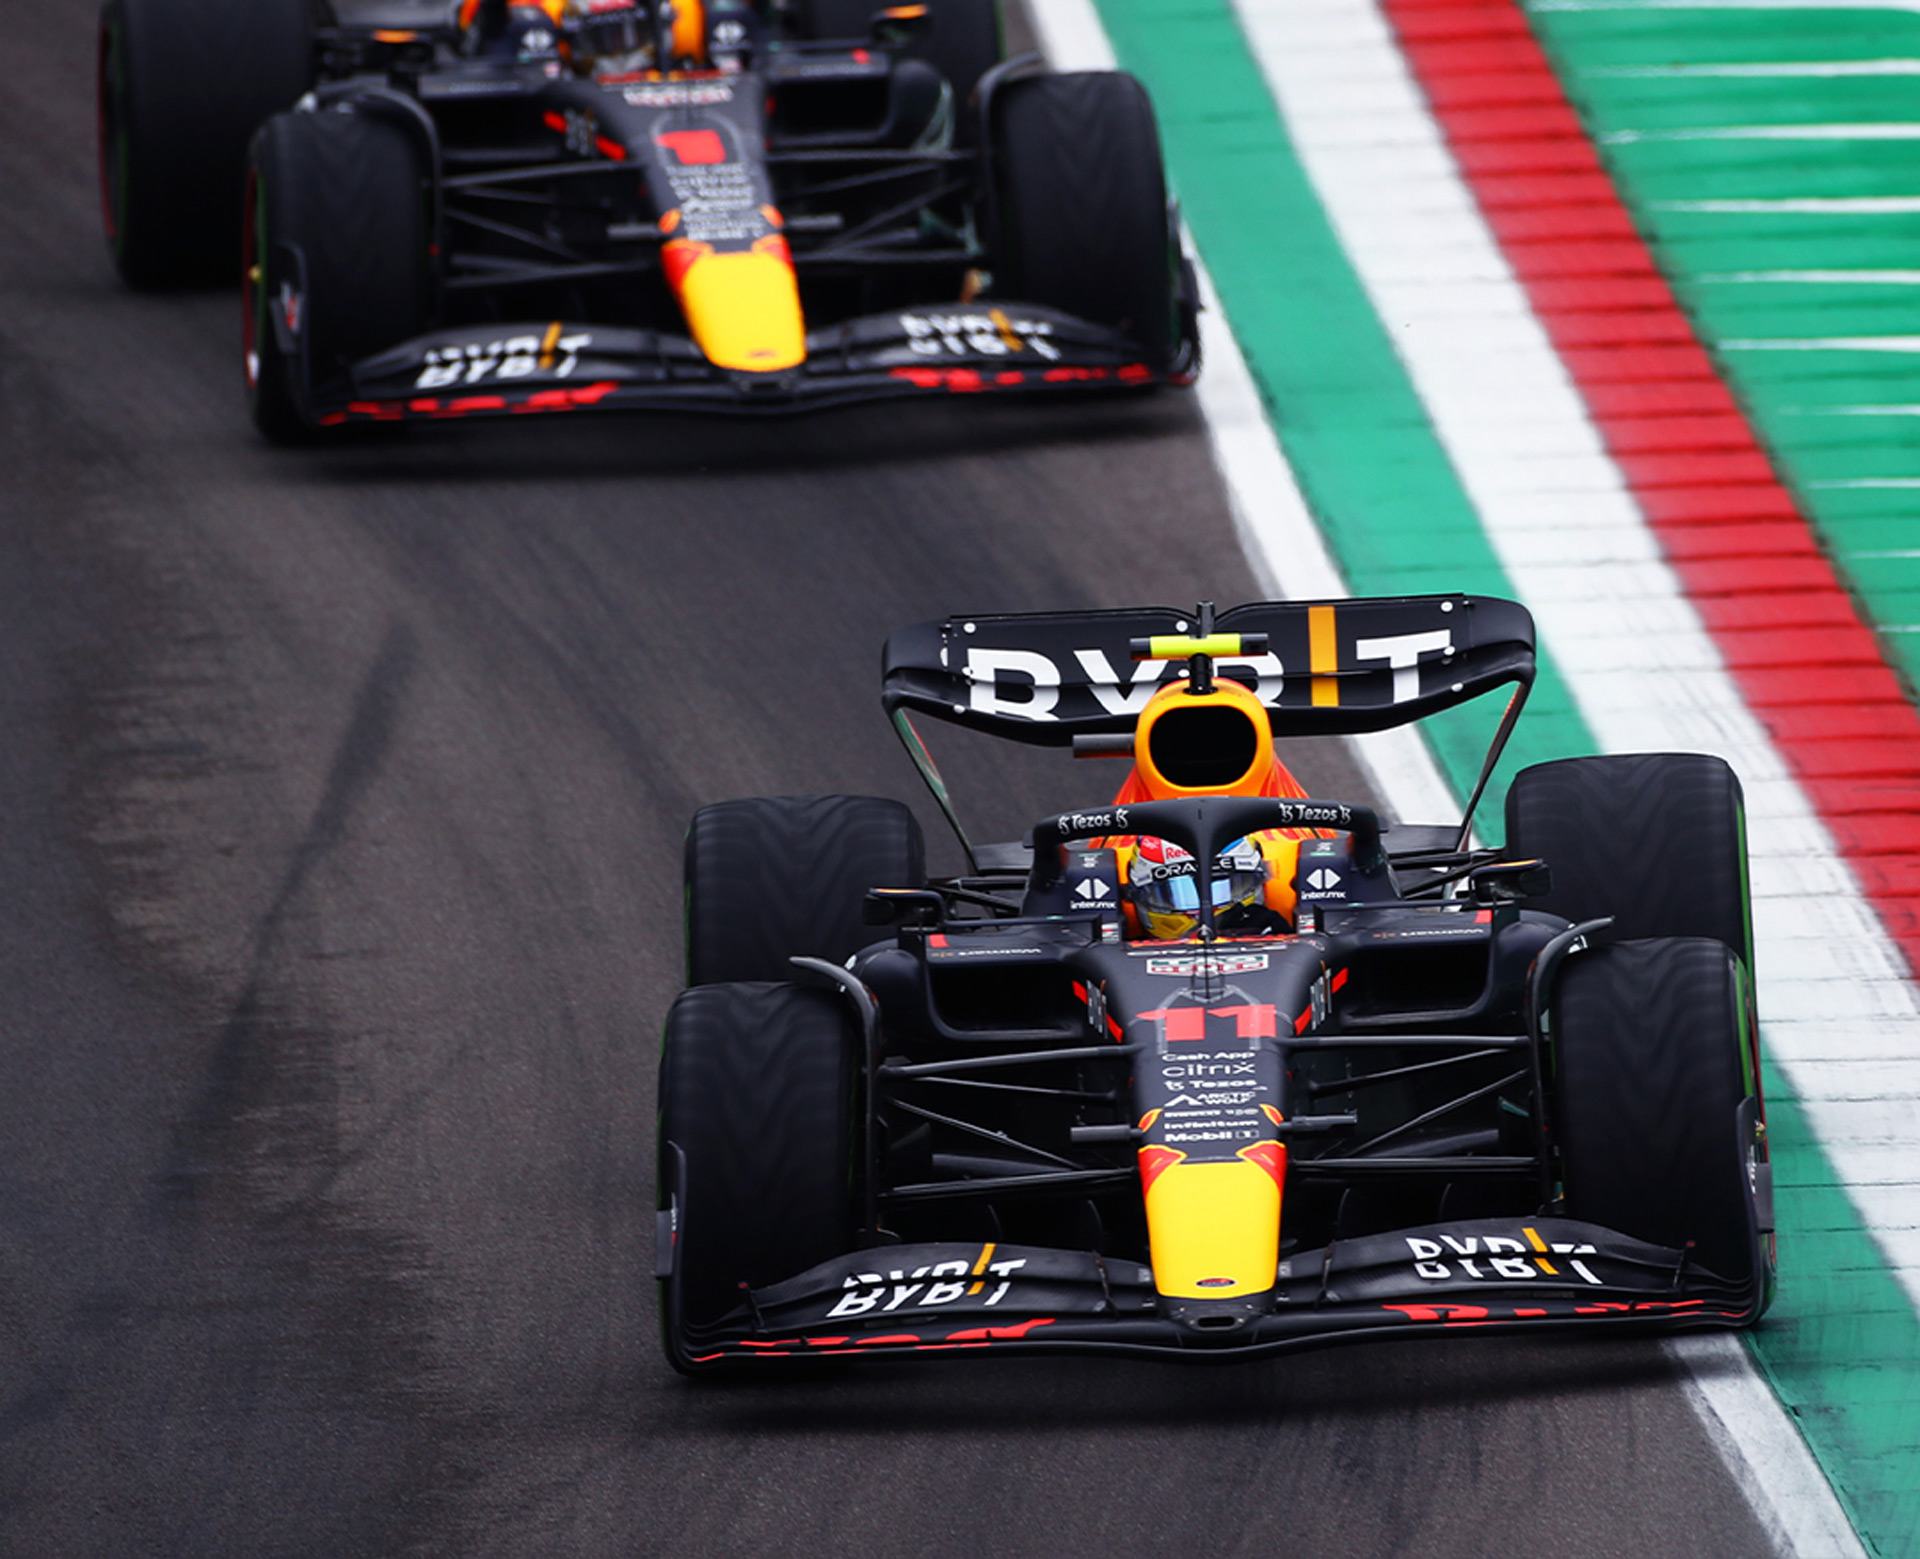 Red Bull Racing Brings Home 1 2 Finish At 22 F1 Emilia Romagna Grand Prix